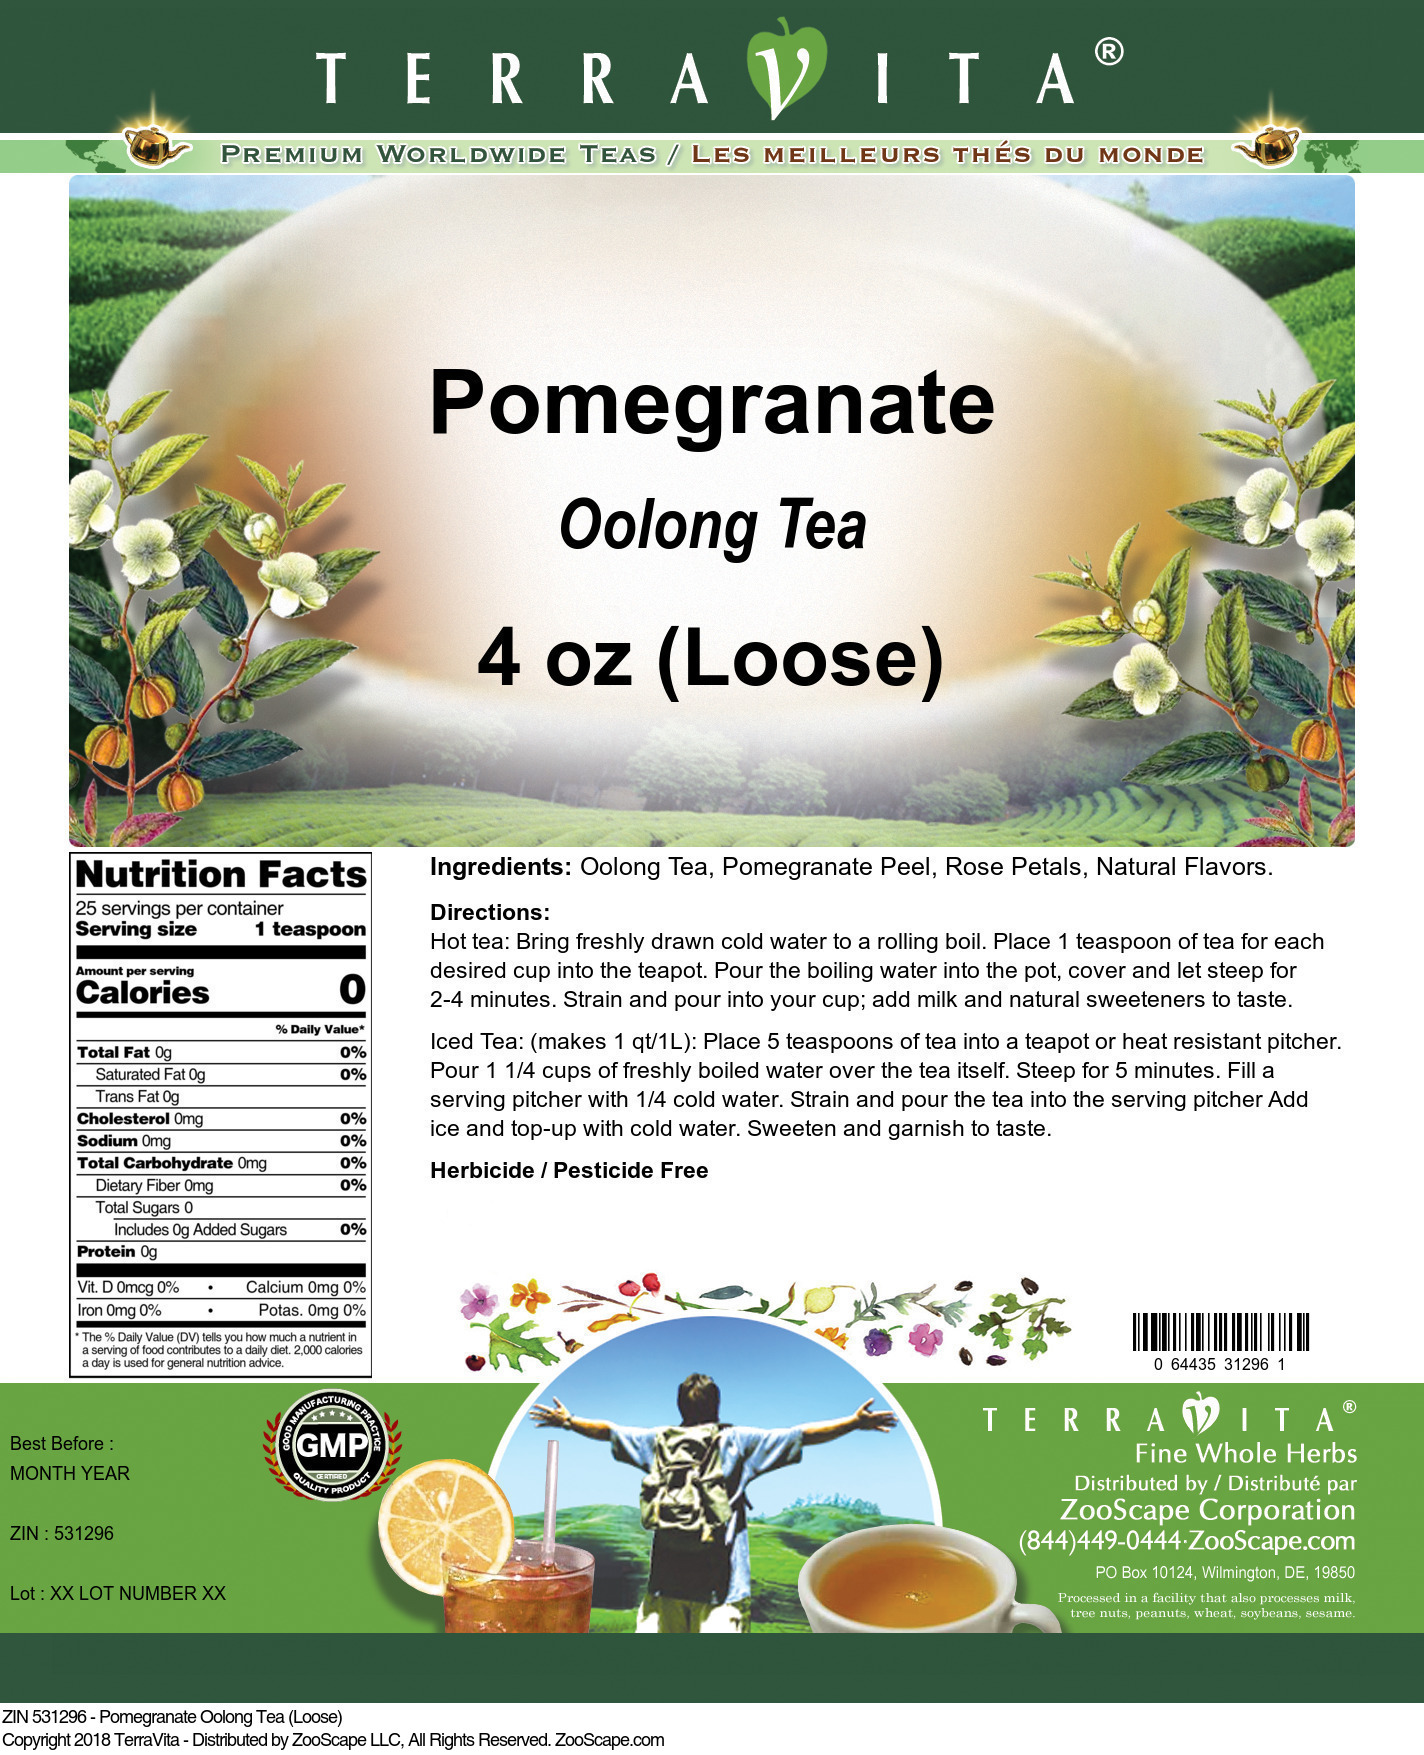 Pomegranate Oolong Tea (Loose) - Label